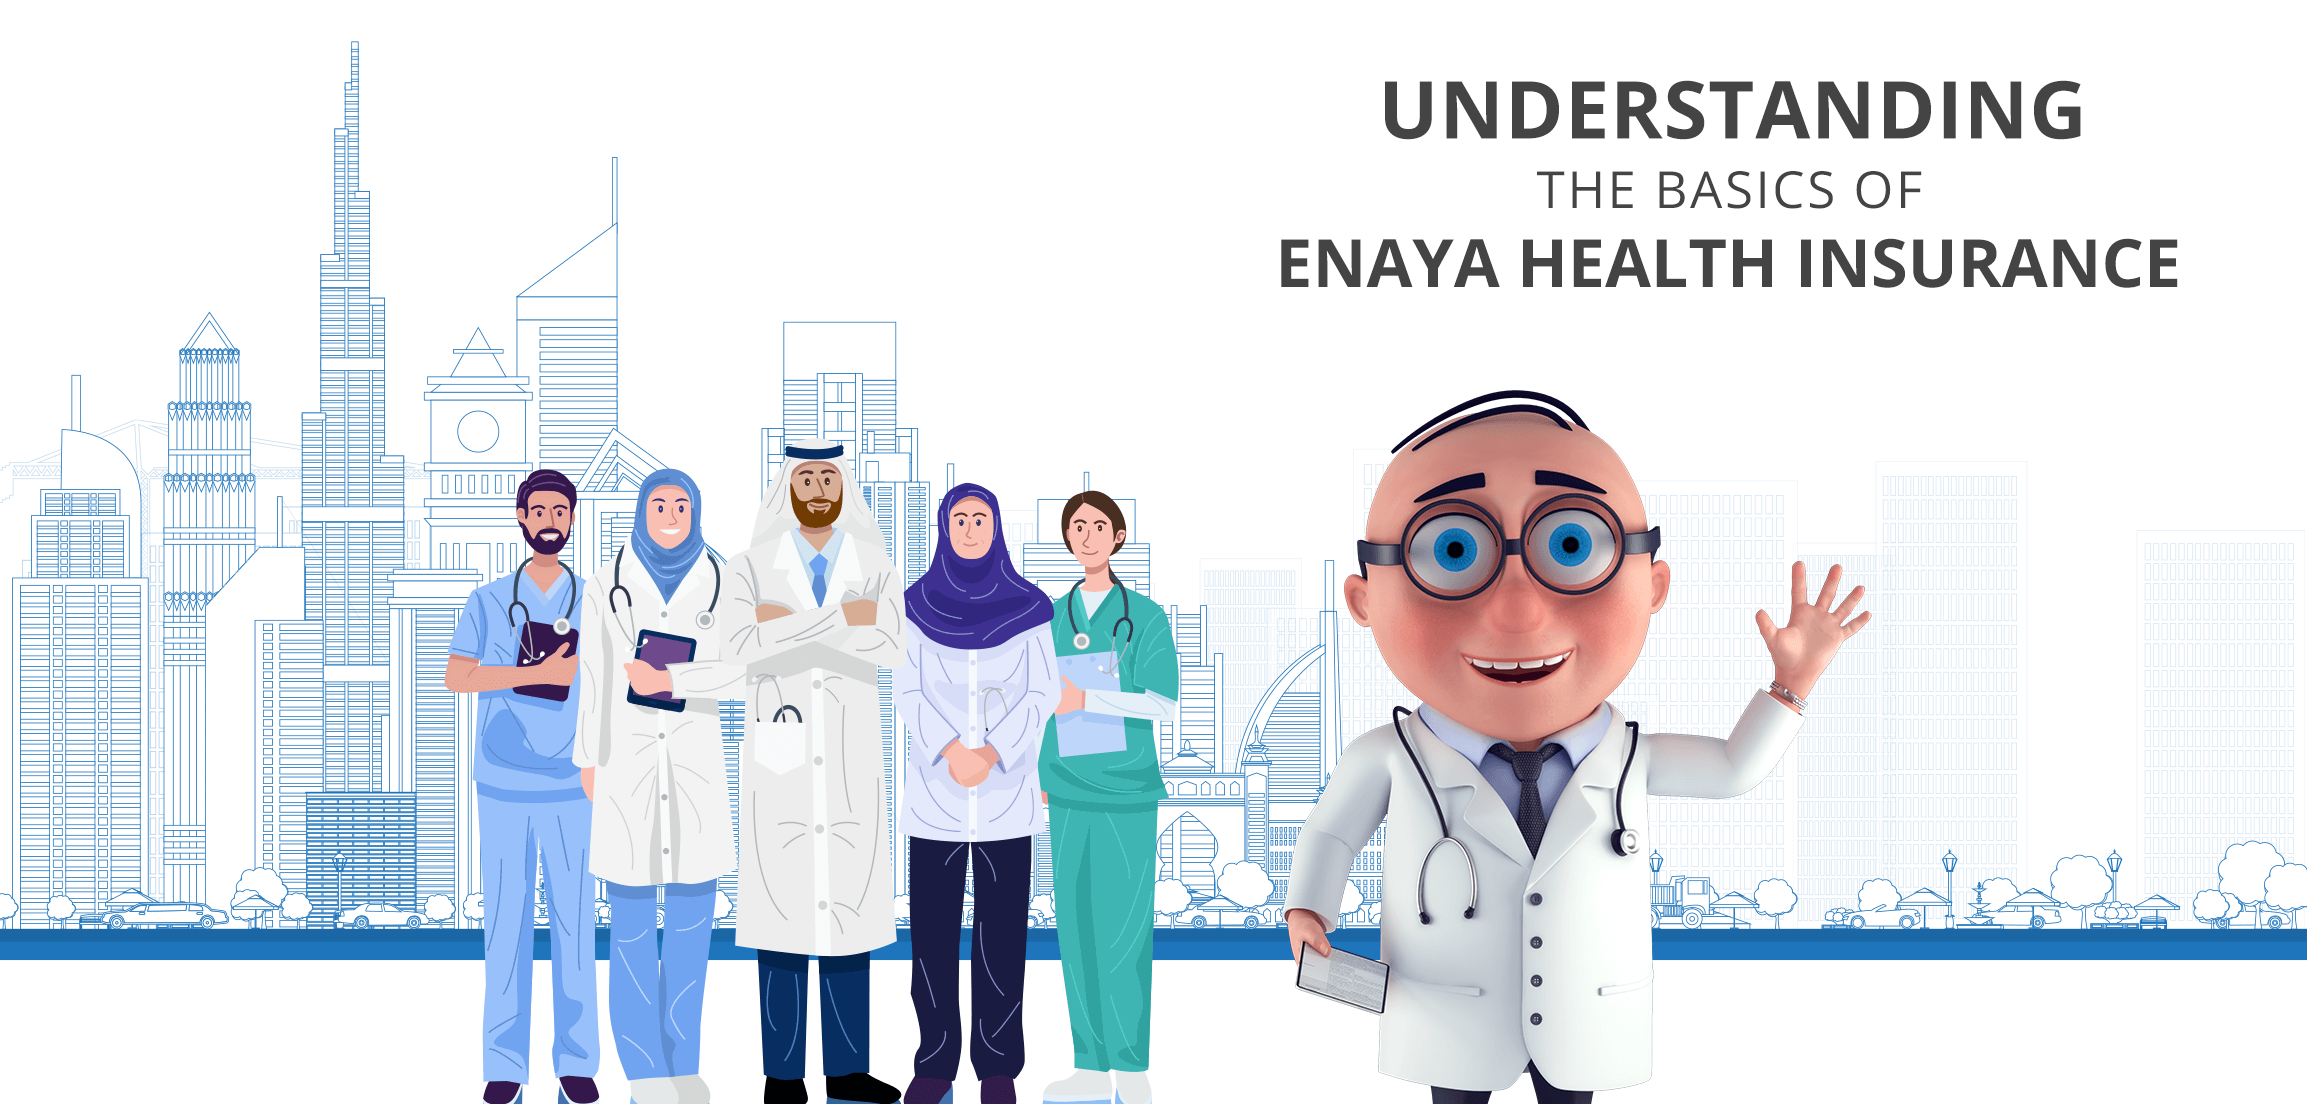 ENAYA Health Insurance